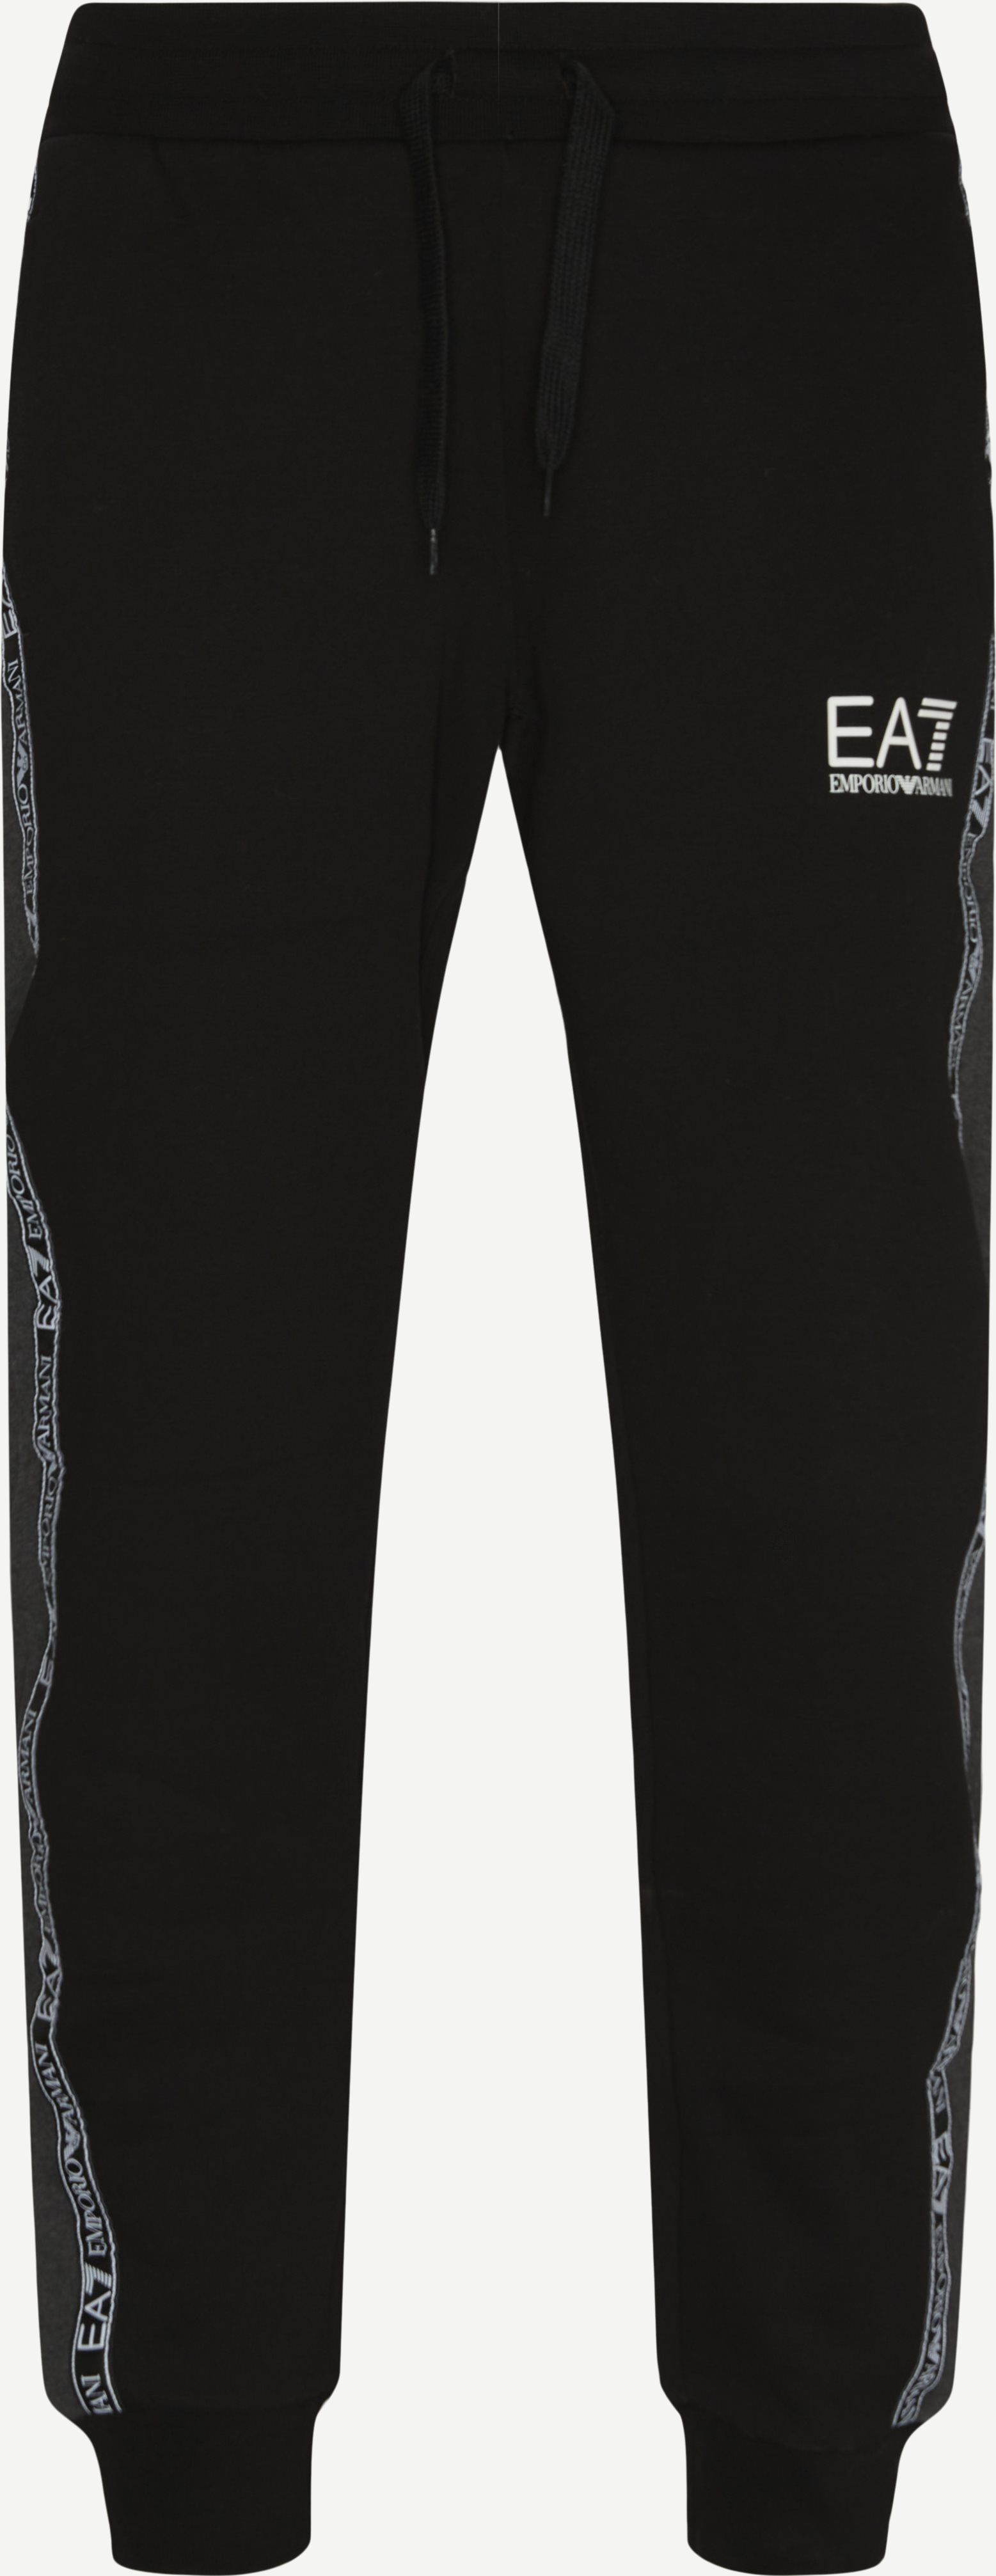 6KPV63 Sweatpants - Trousers - Regular fit - Black